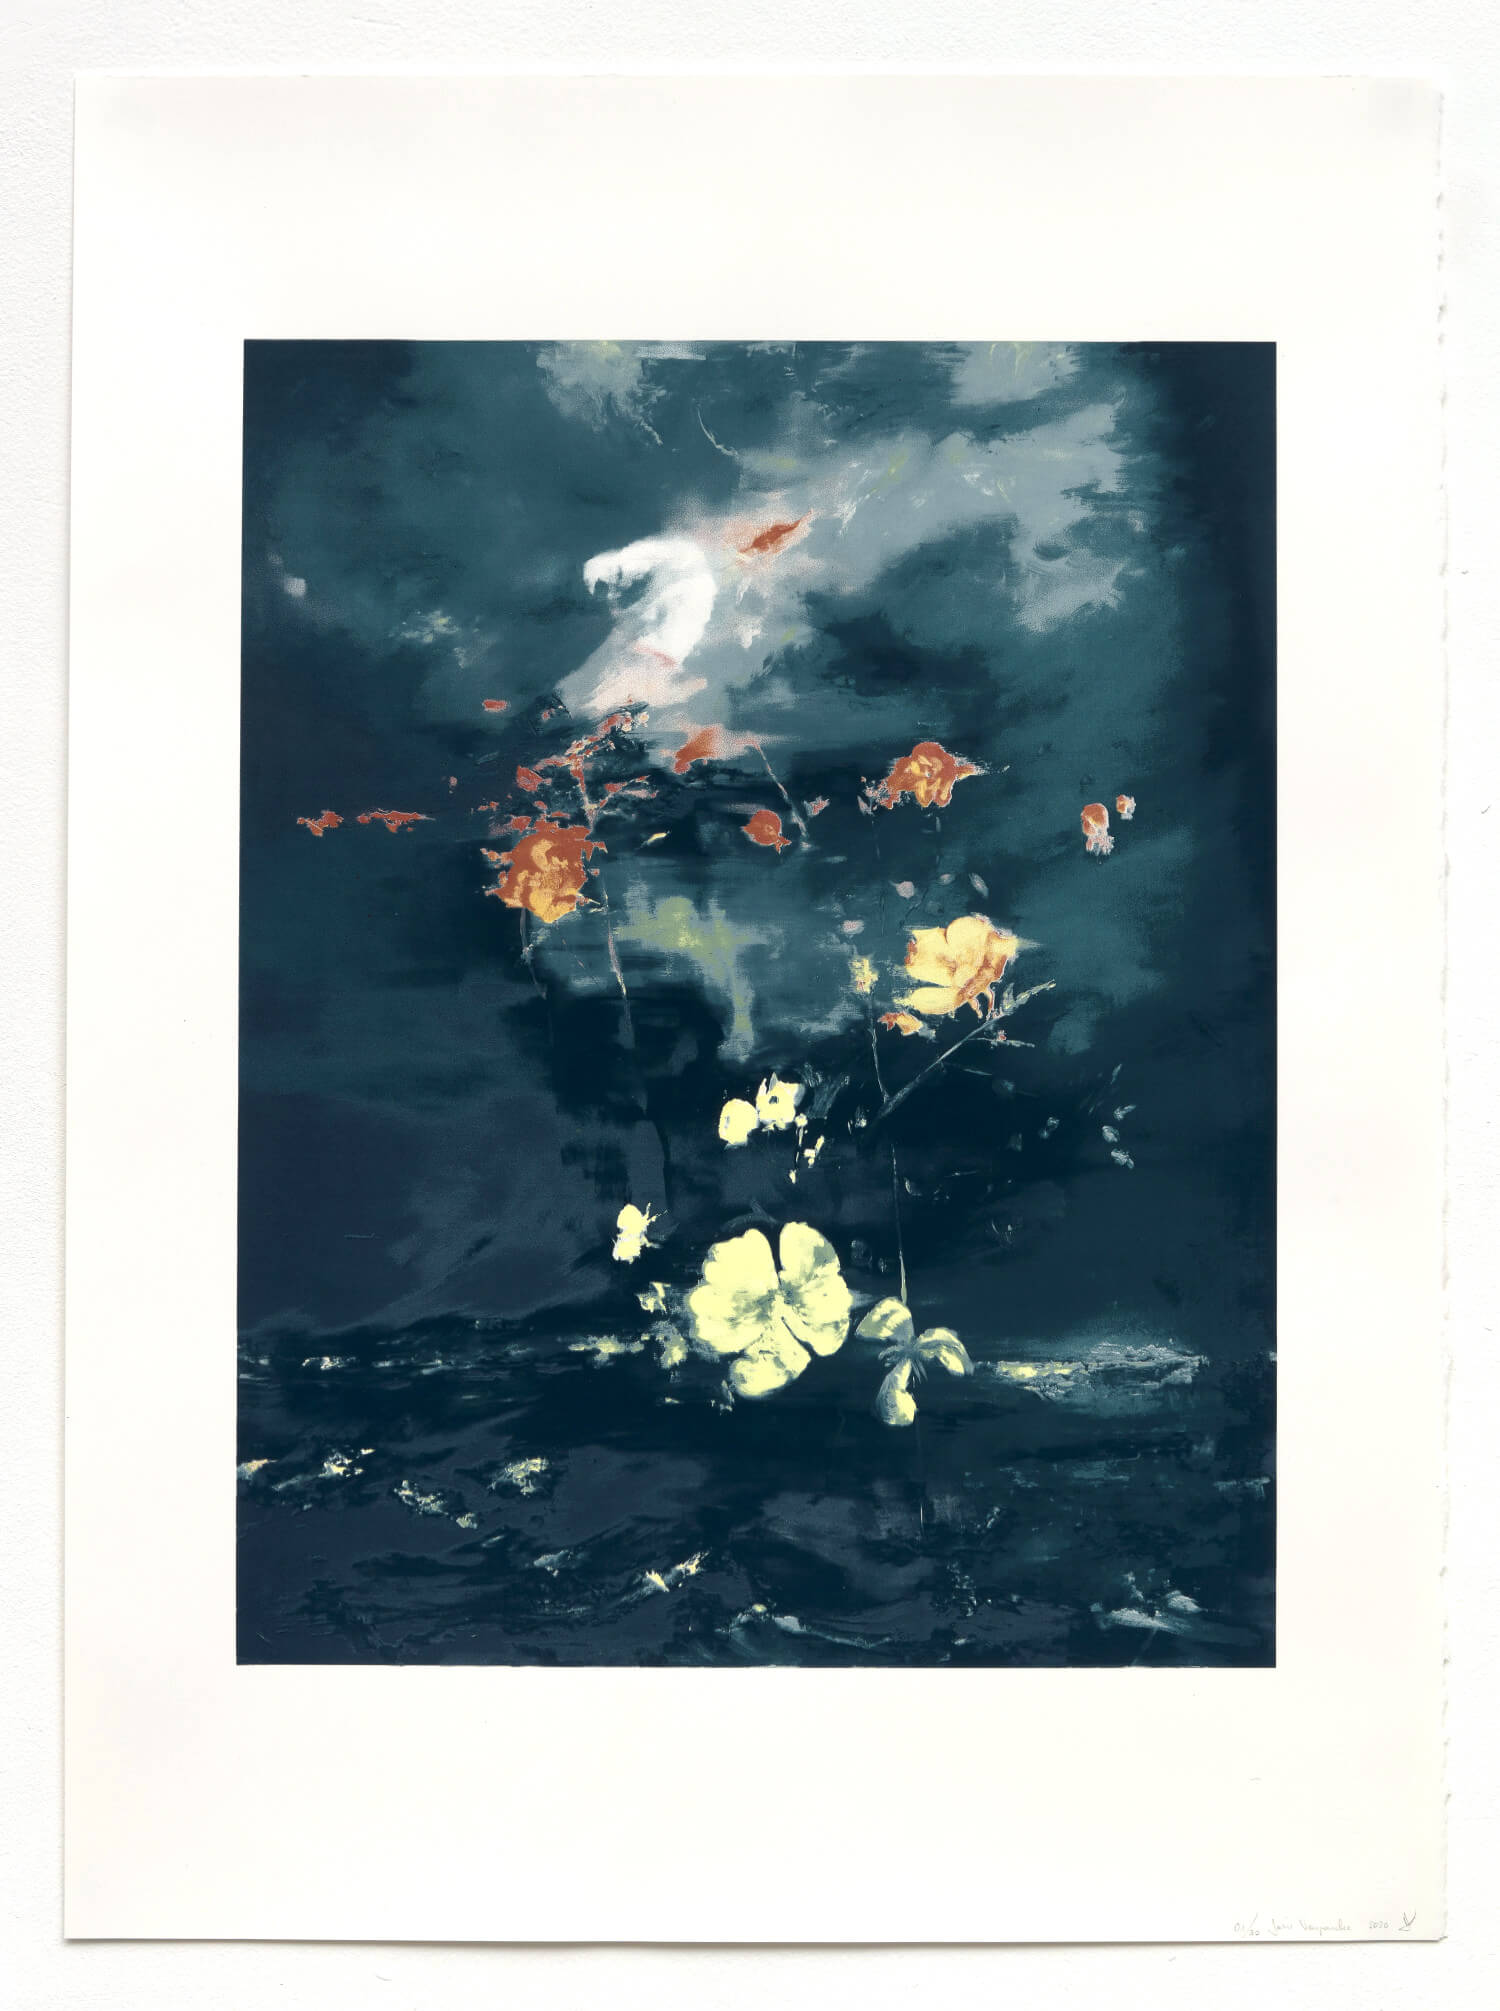 joris vanpoucke, copper sky, silkscreen print, dmw gallery